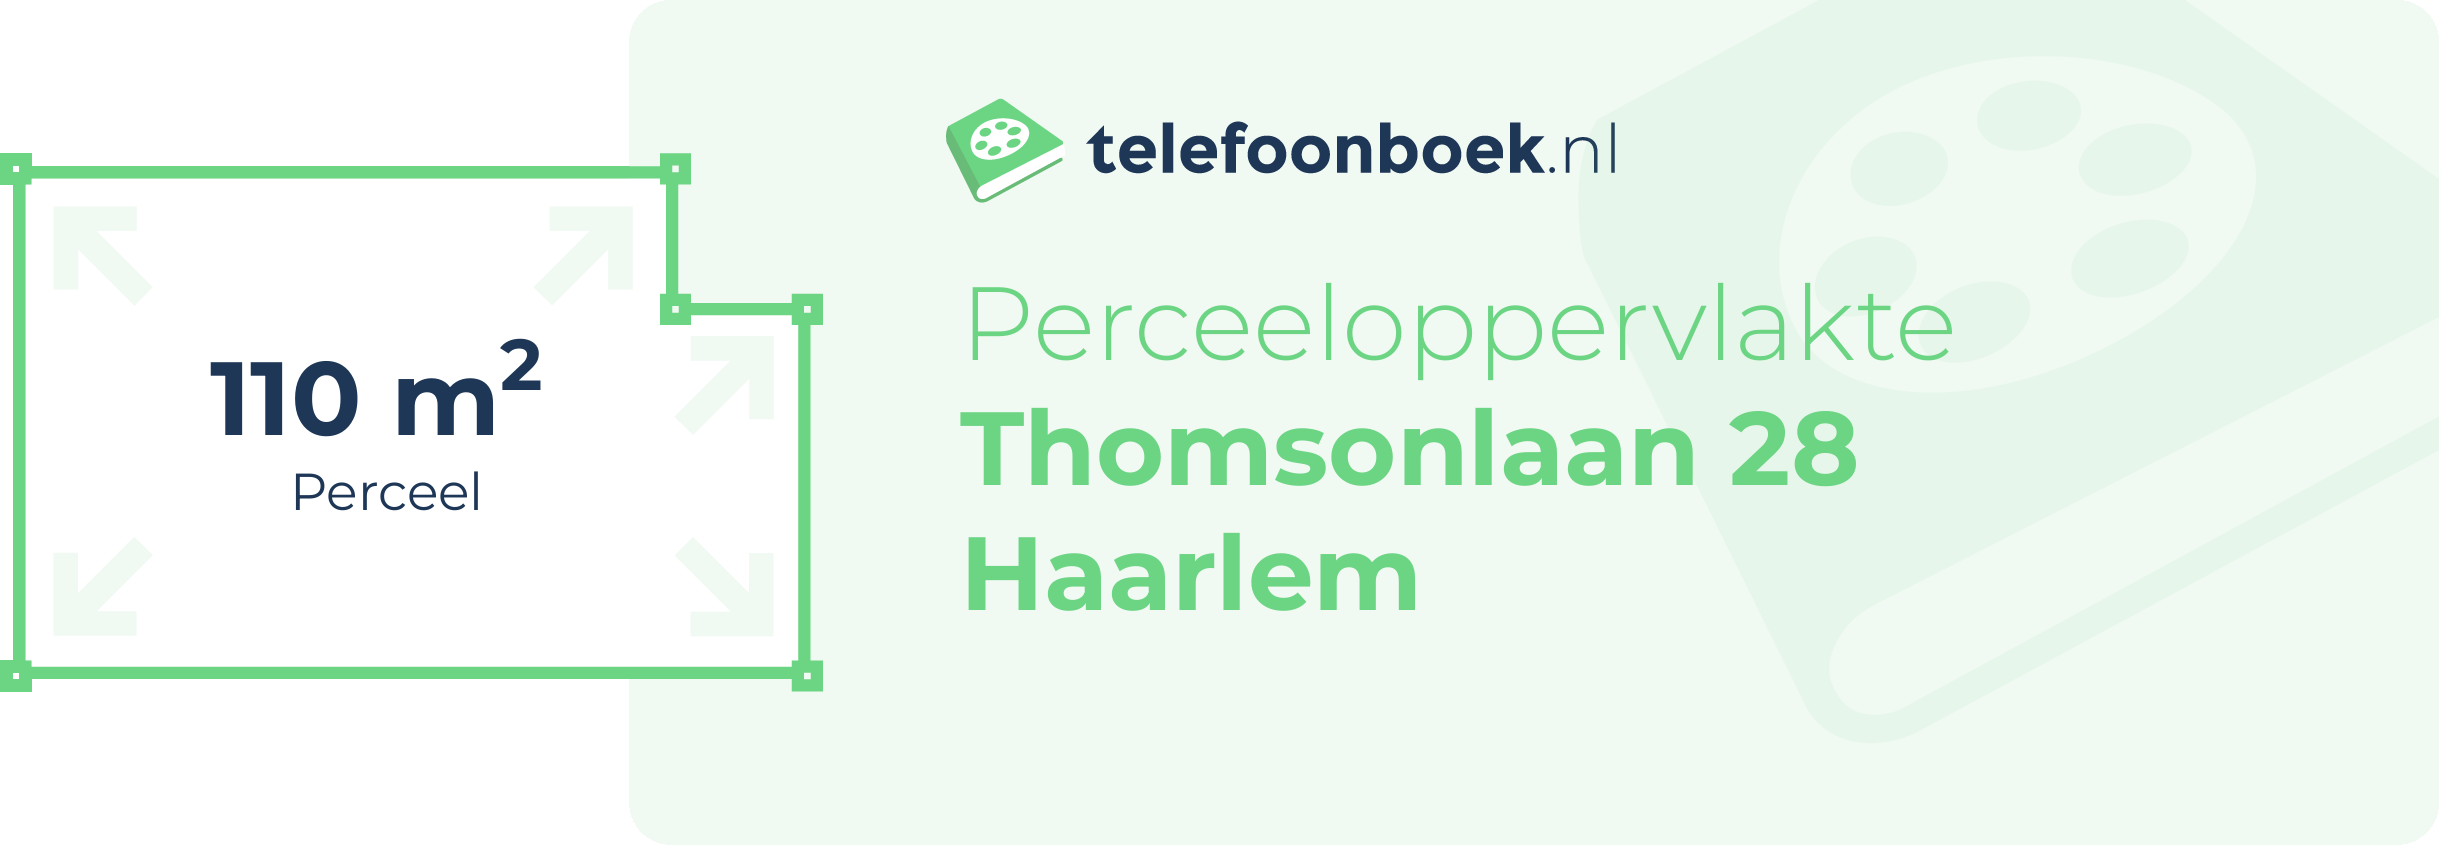 Perceeloppervlakte Thomsonlaan 28 Haarlem